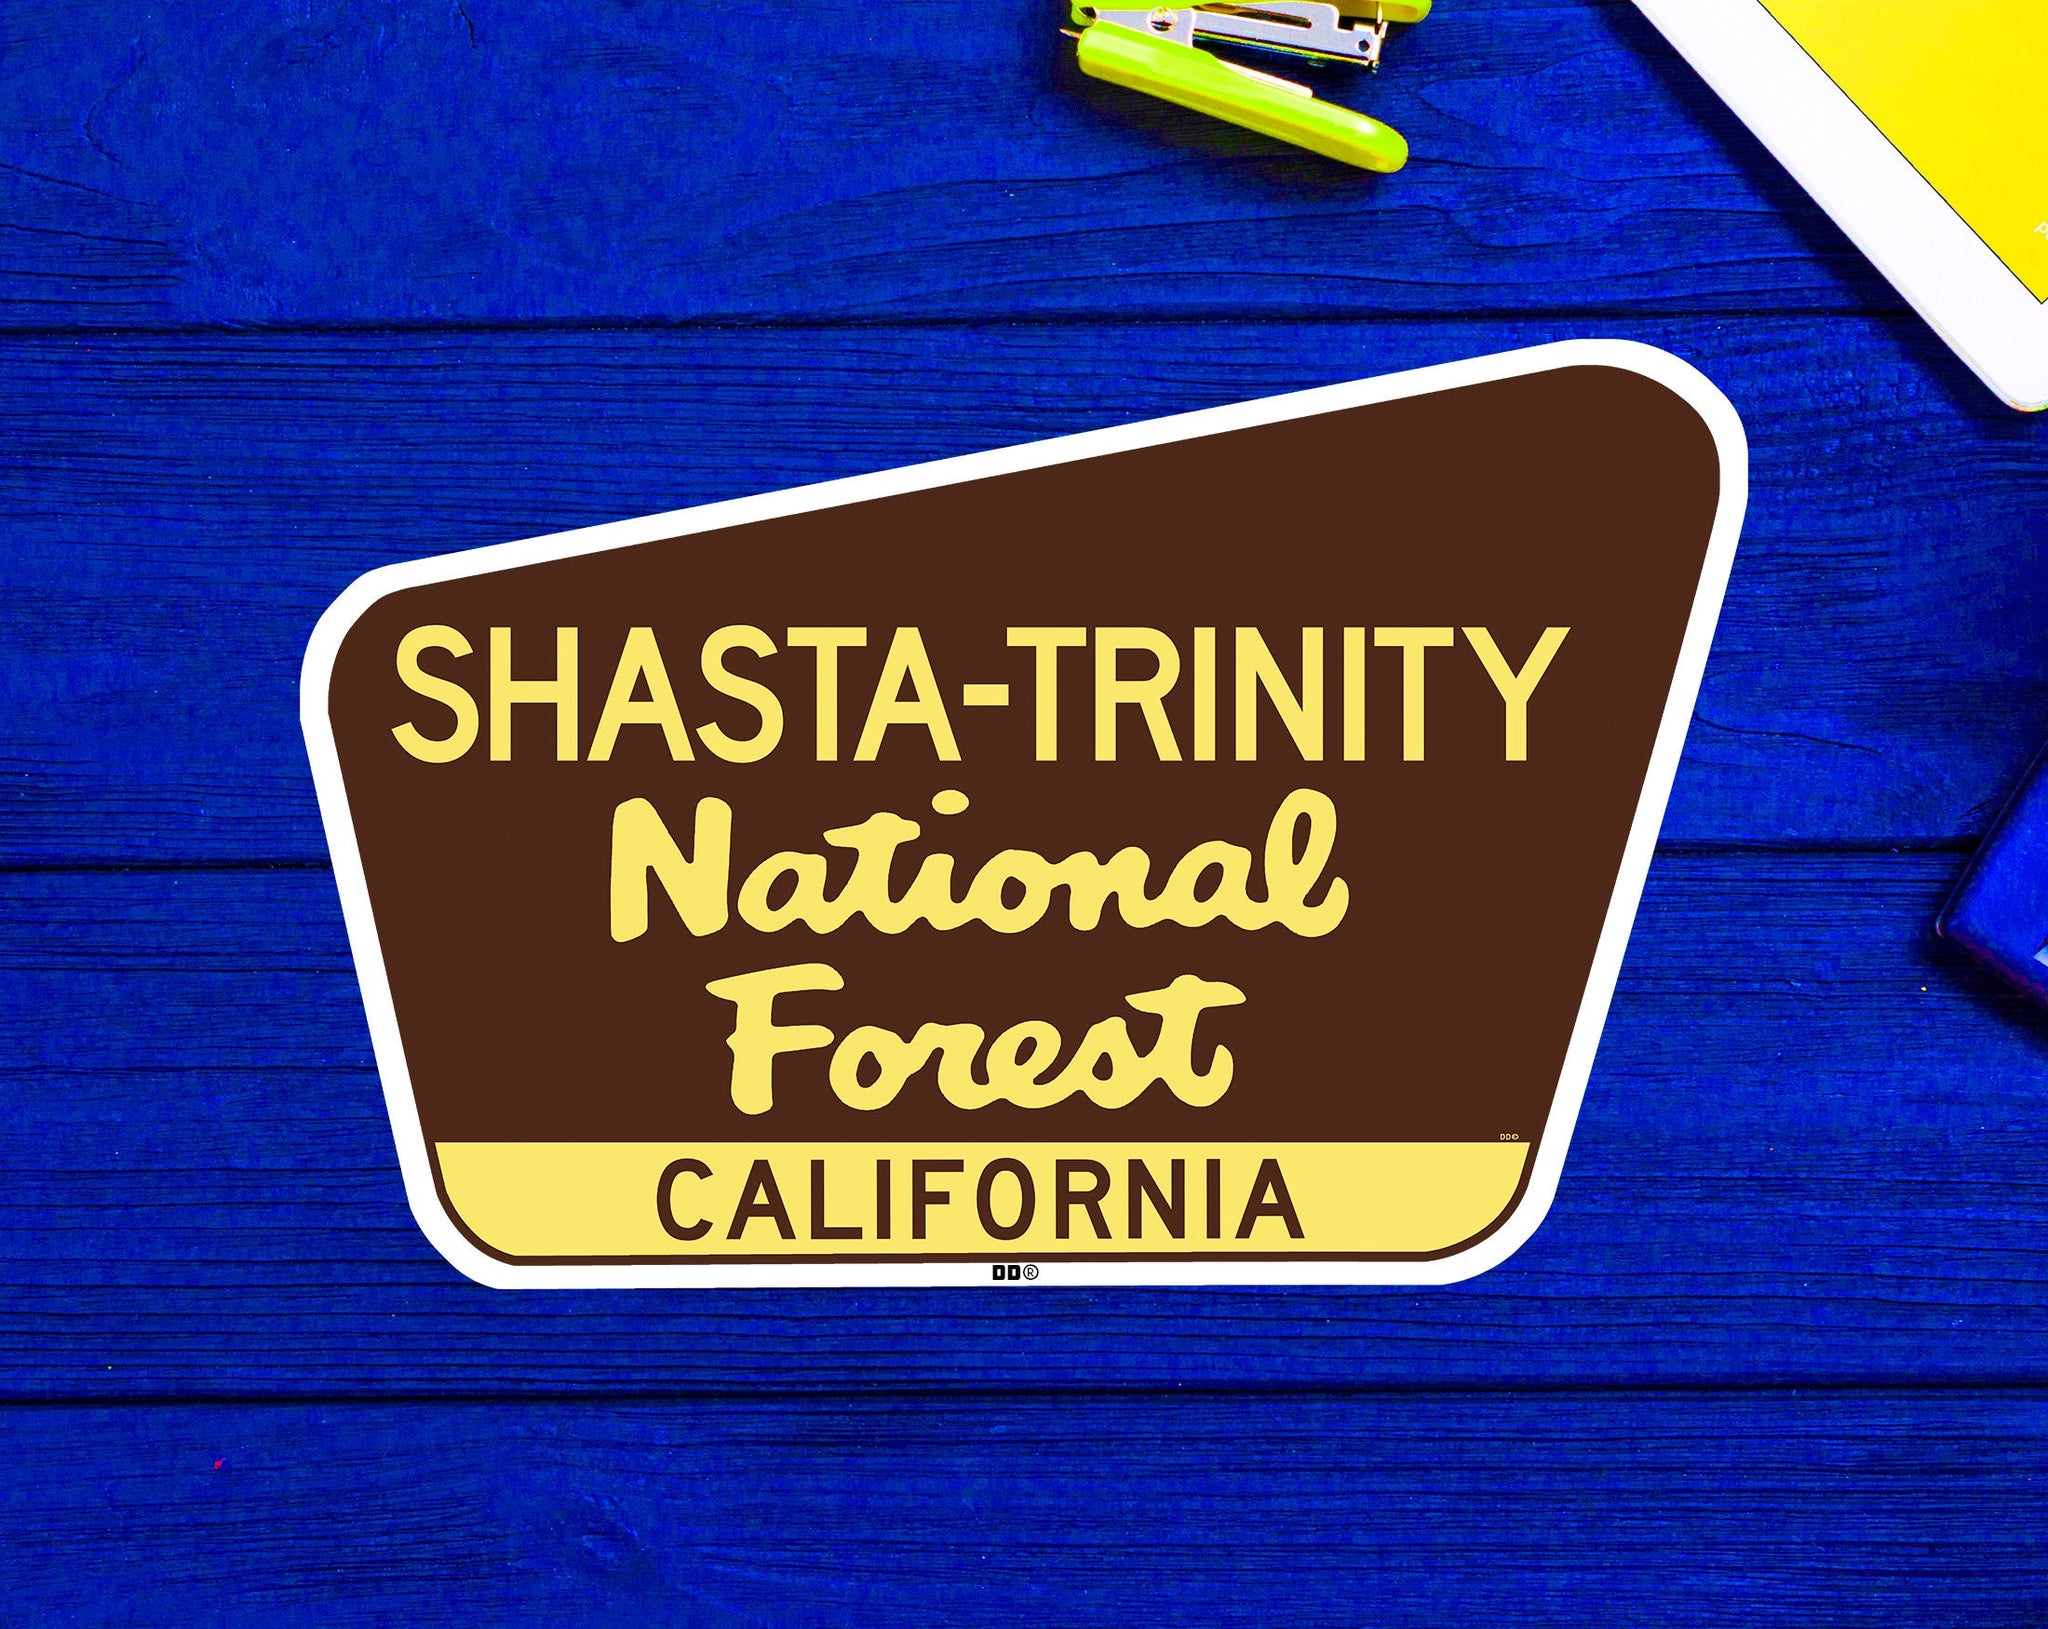 Shasta Trinity National Forest California Decal Sticker 3.75" x 2.5" Vinyl